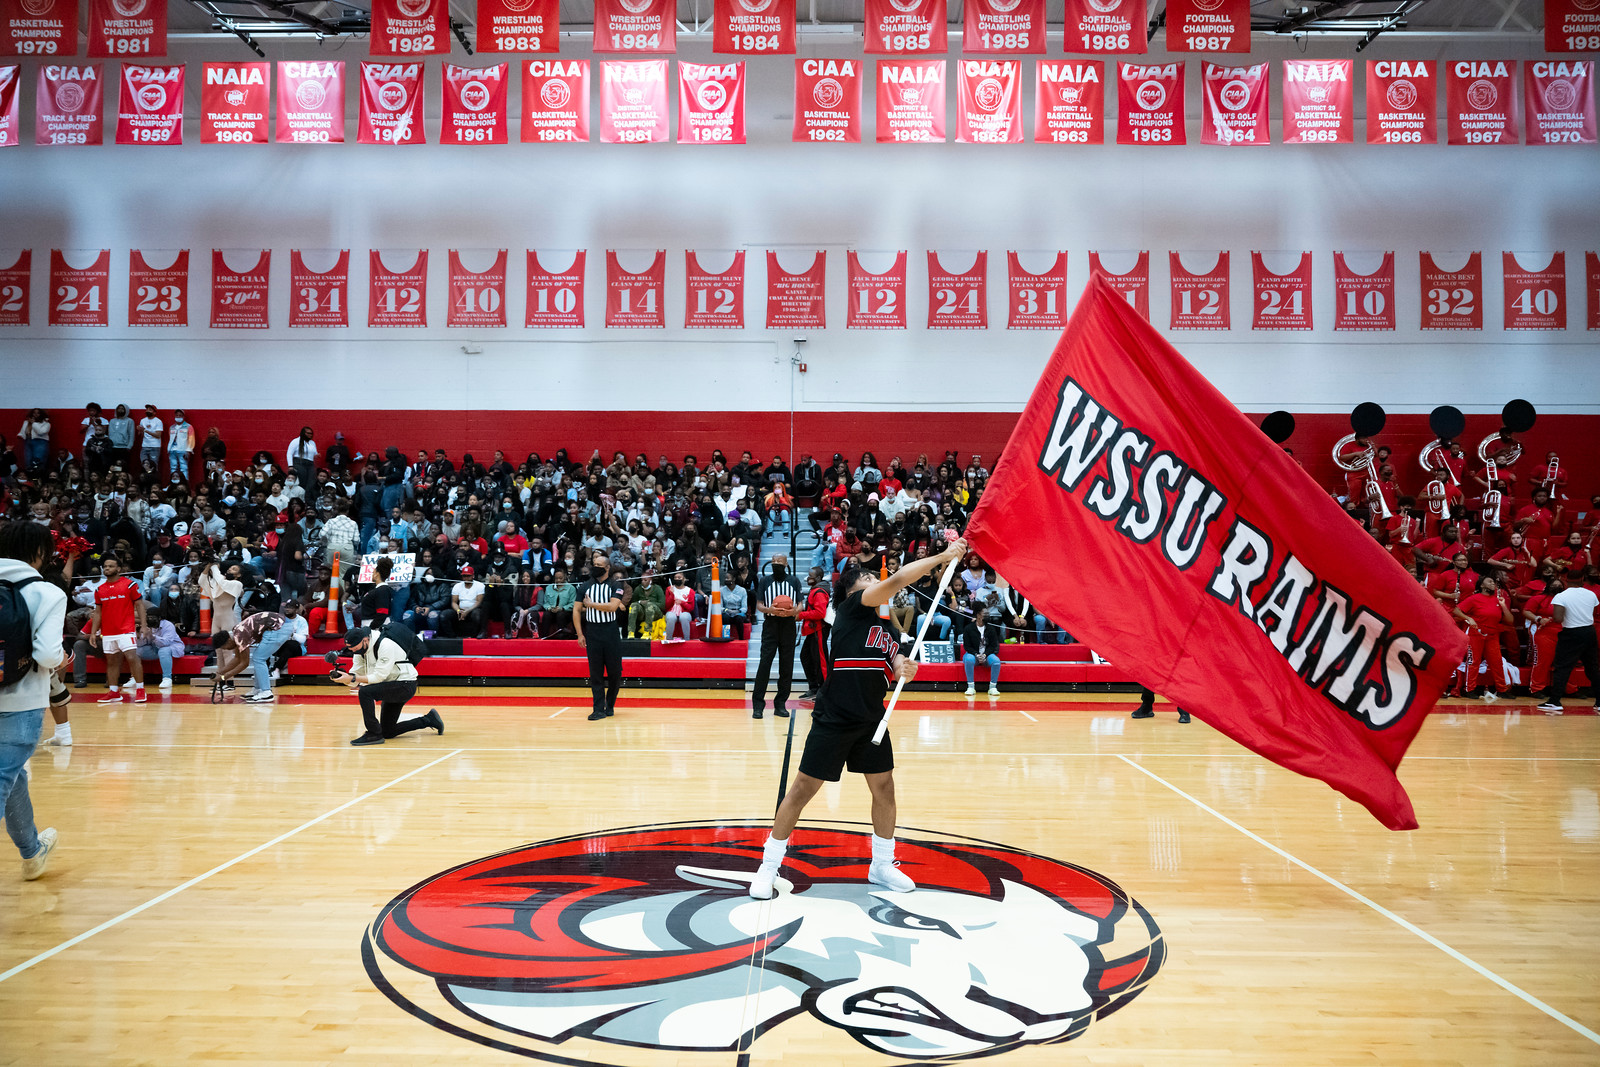 basketball game, student waving WSSU flag 